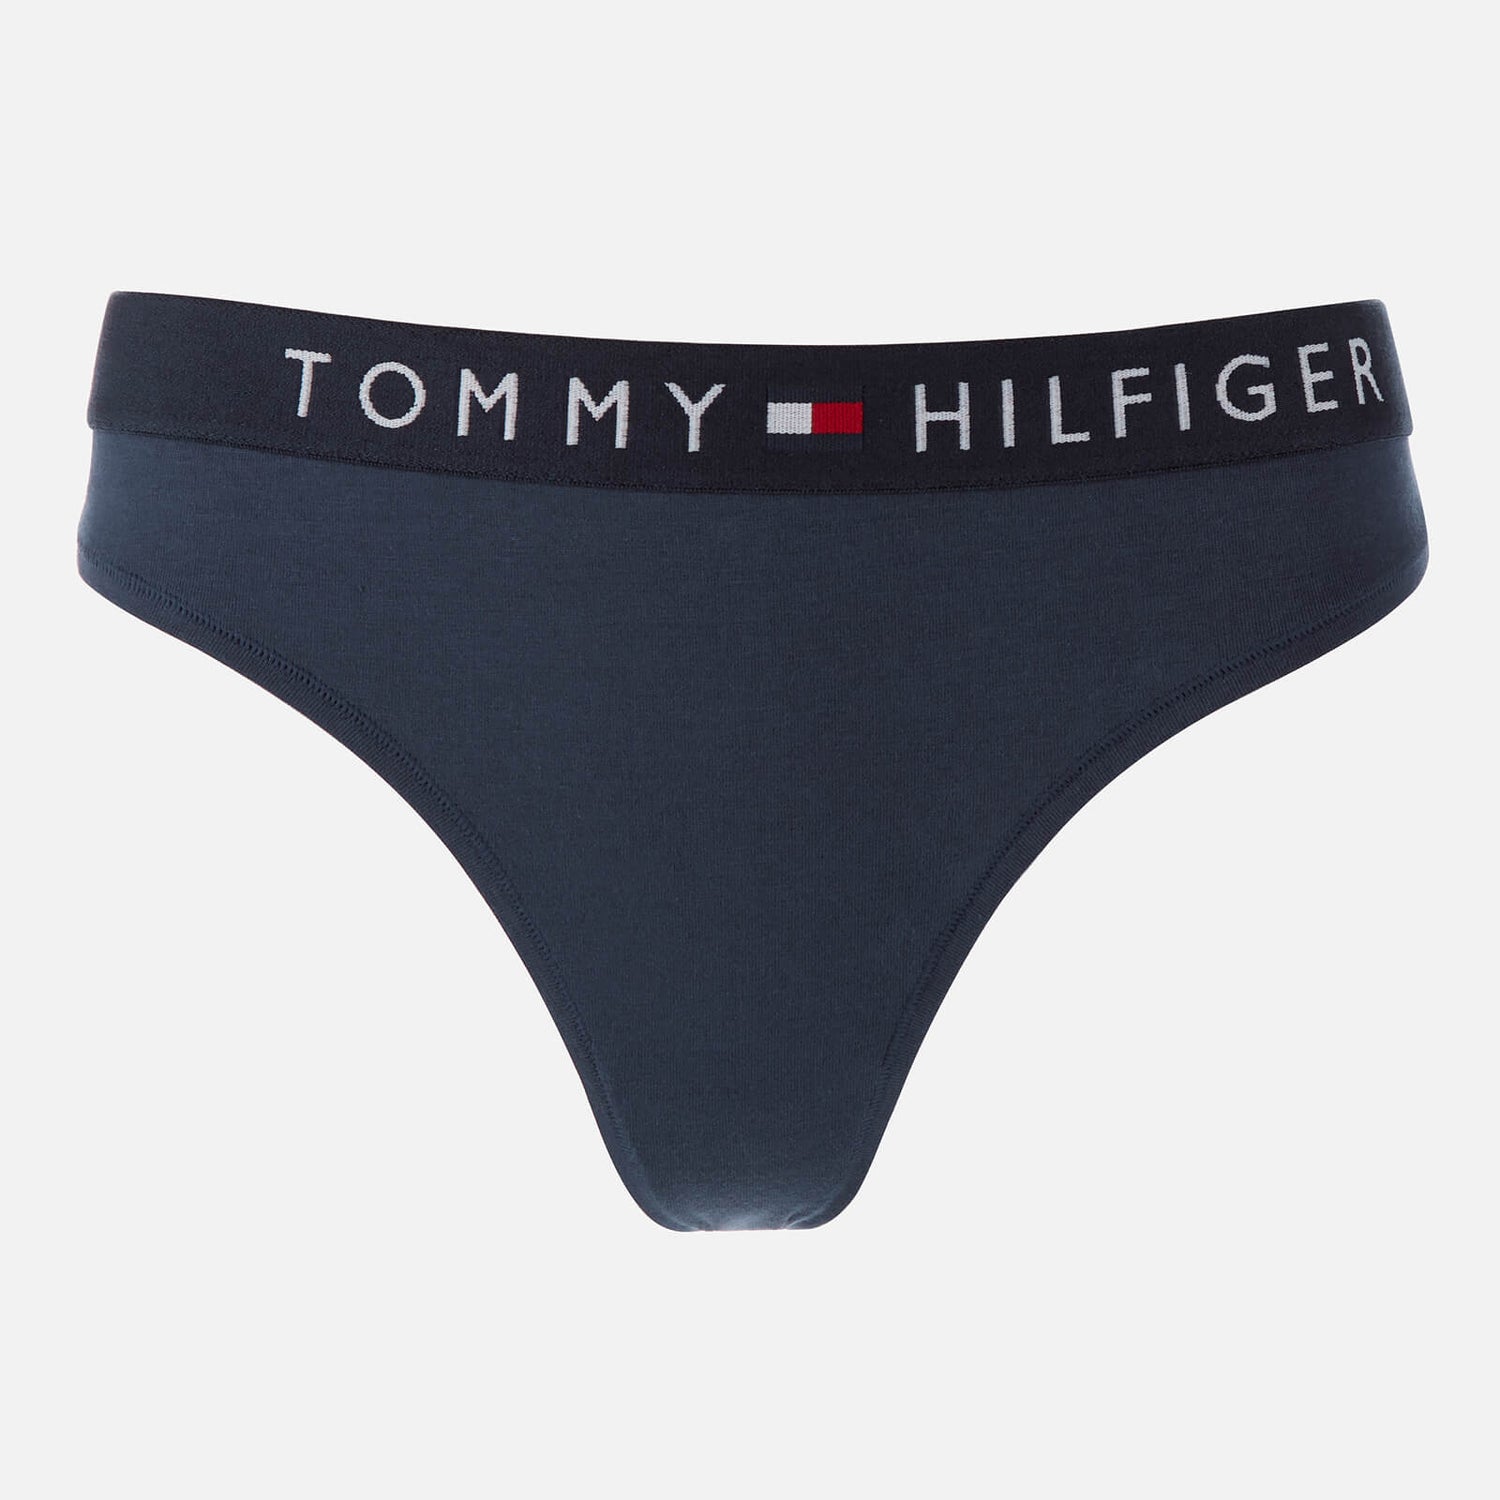 Tommy Hilfiger Women's Thong - Navy Blazer - XS